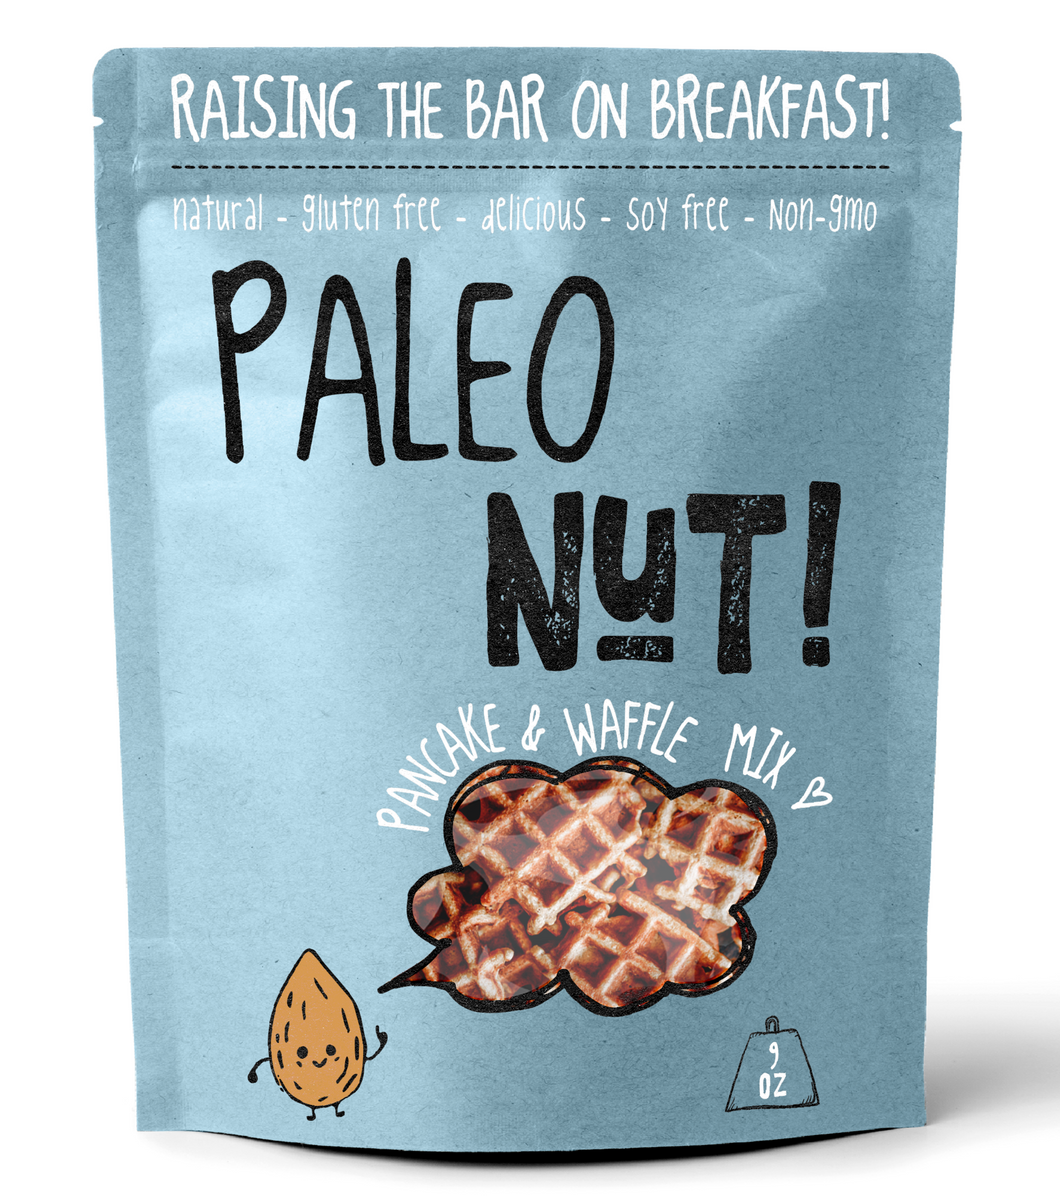 gluten free paleo pancake and waffle mix by Paleo Nut